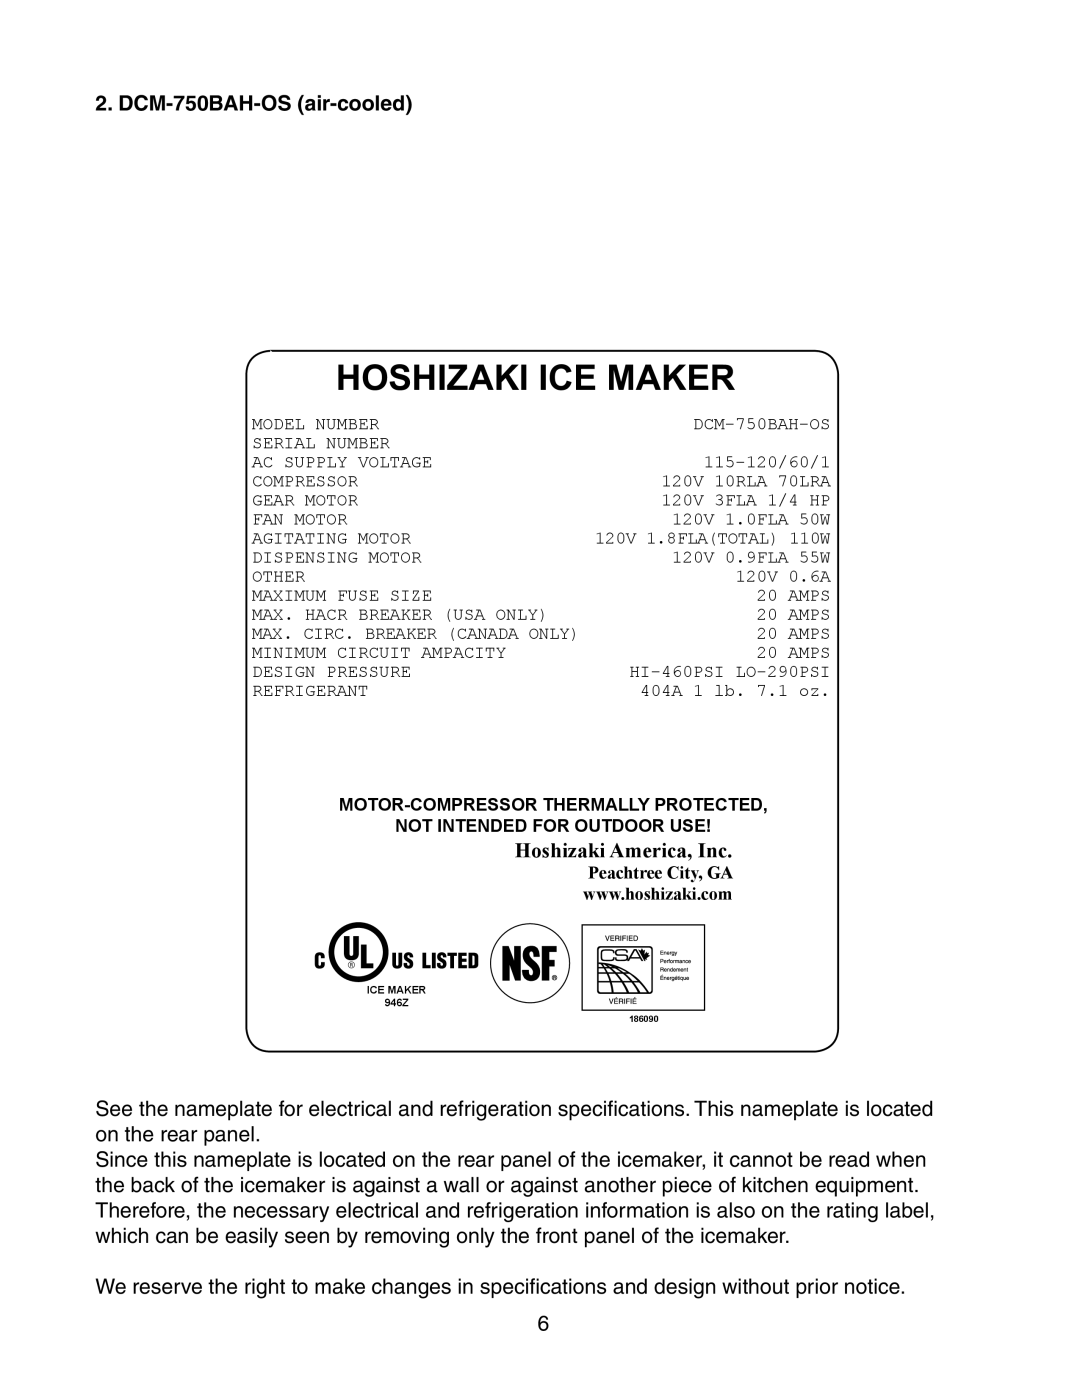 Hoshizaki DCM-750BWH(-OS), DCM-750BAH(-OS) Hoshizaki Ice Maker, DCM-750BAH-OS air-cooled, Hoshizaki America, Inc 